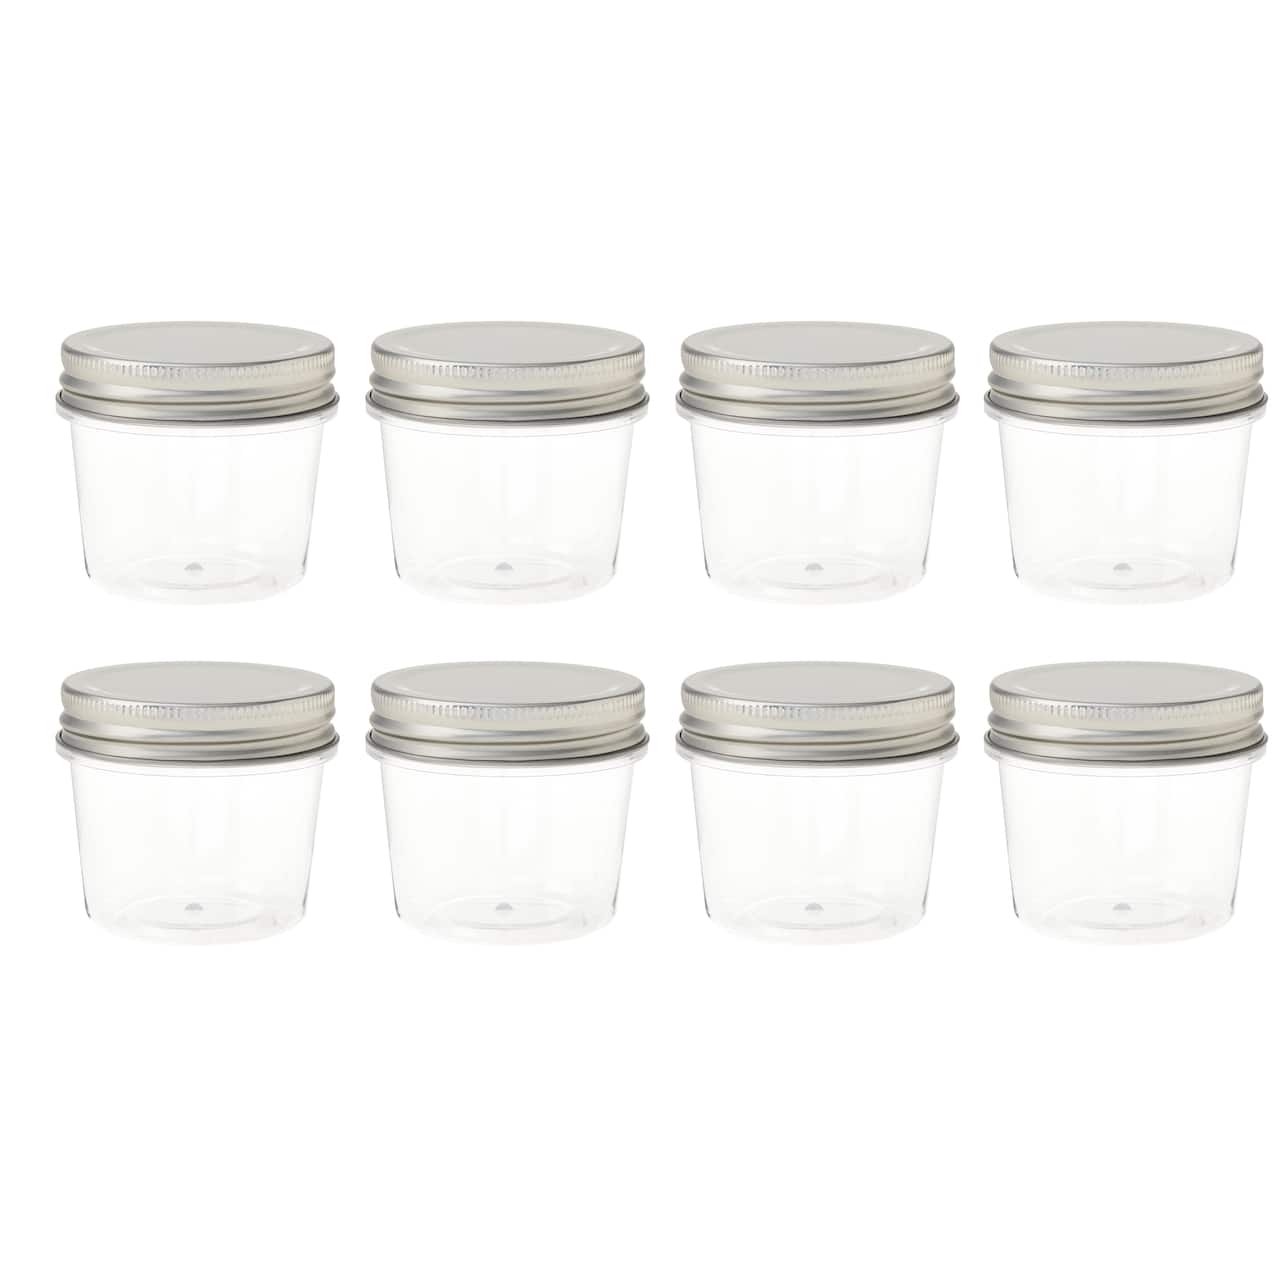 8 Packs: 10 ct. (80 total) 4oz. Plastic Mason Jars by Celebrate It